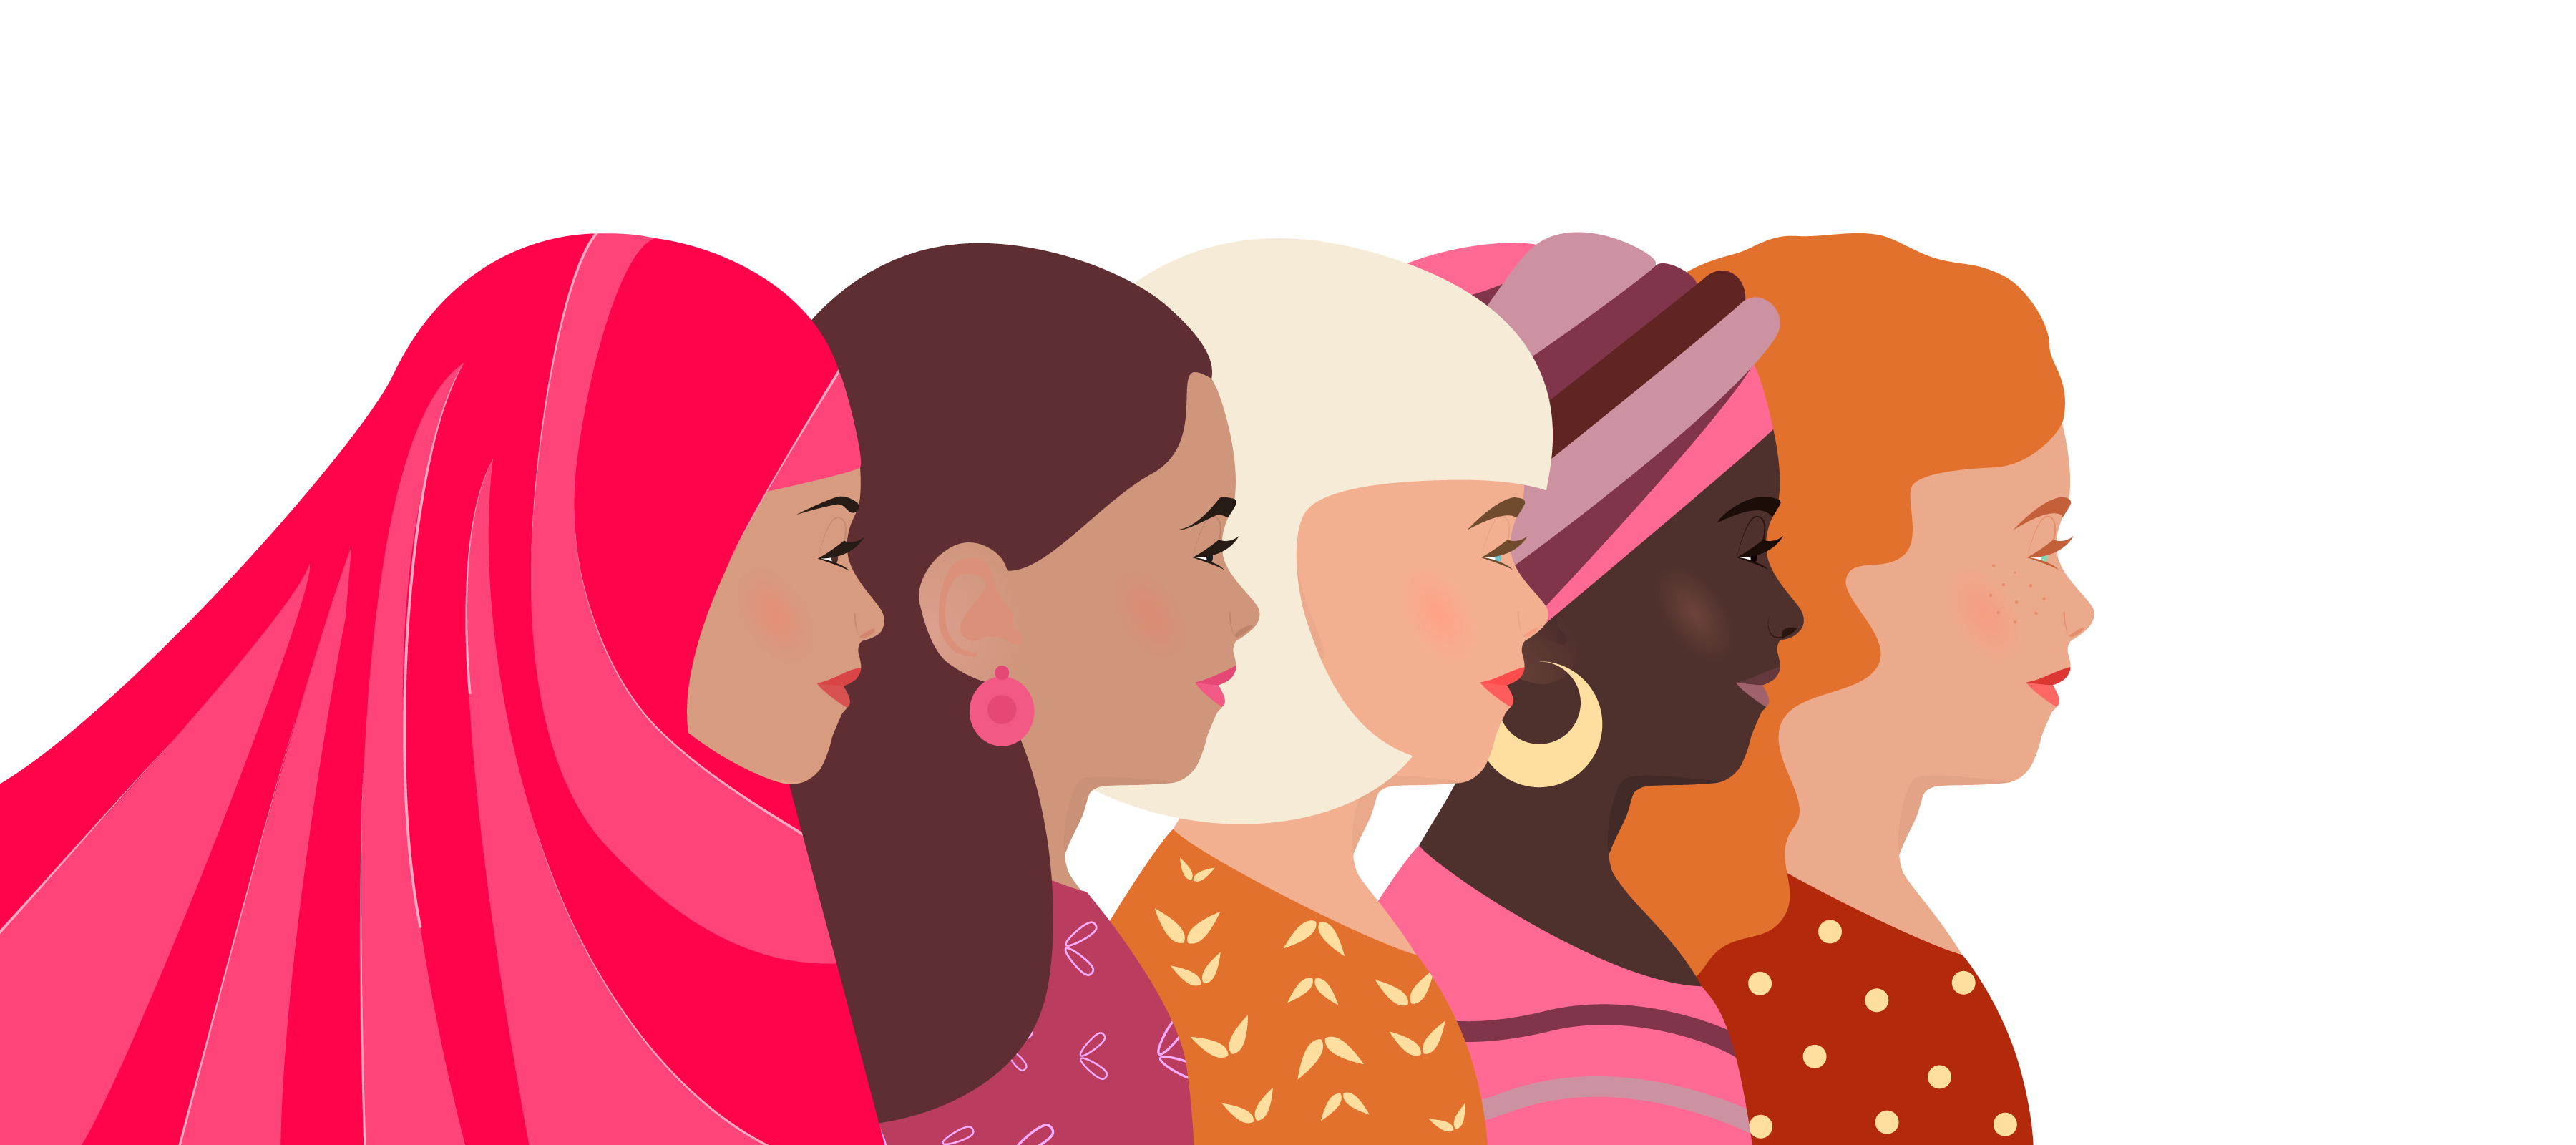 Illustration, women of different faiths